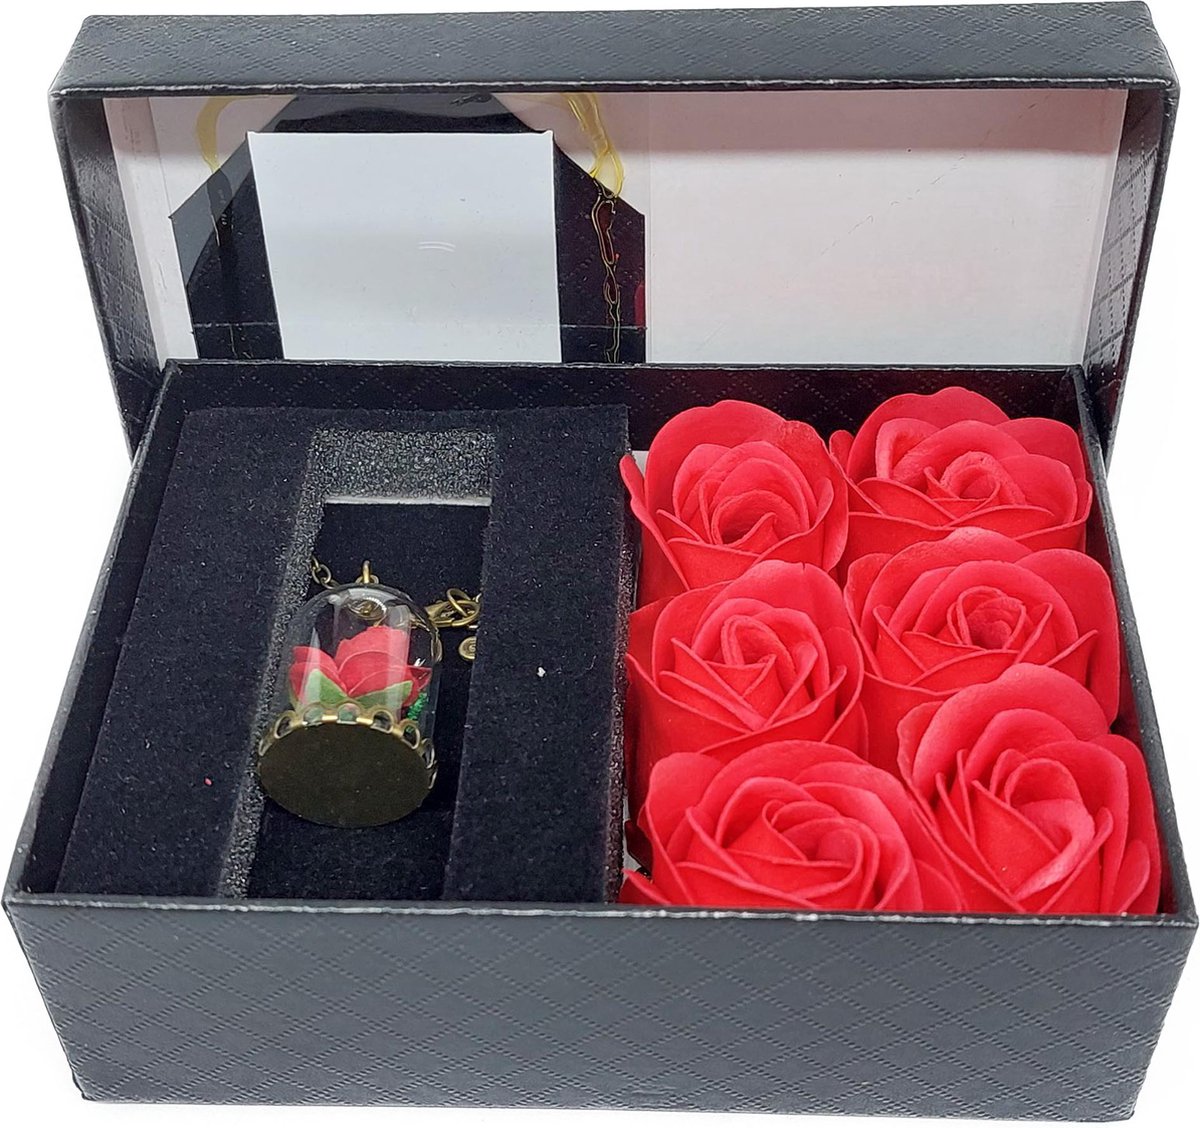 Cadeaubox special - Roos Cadeau Doos Belle - Belle en de Roos hanger - Ketting - Cadeau doos kunst rozen